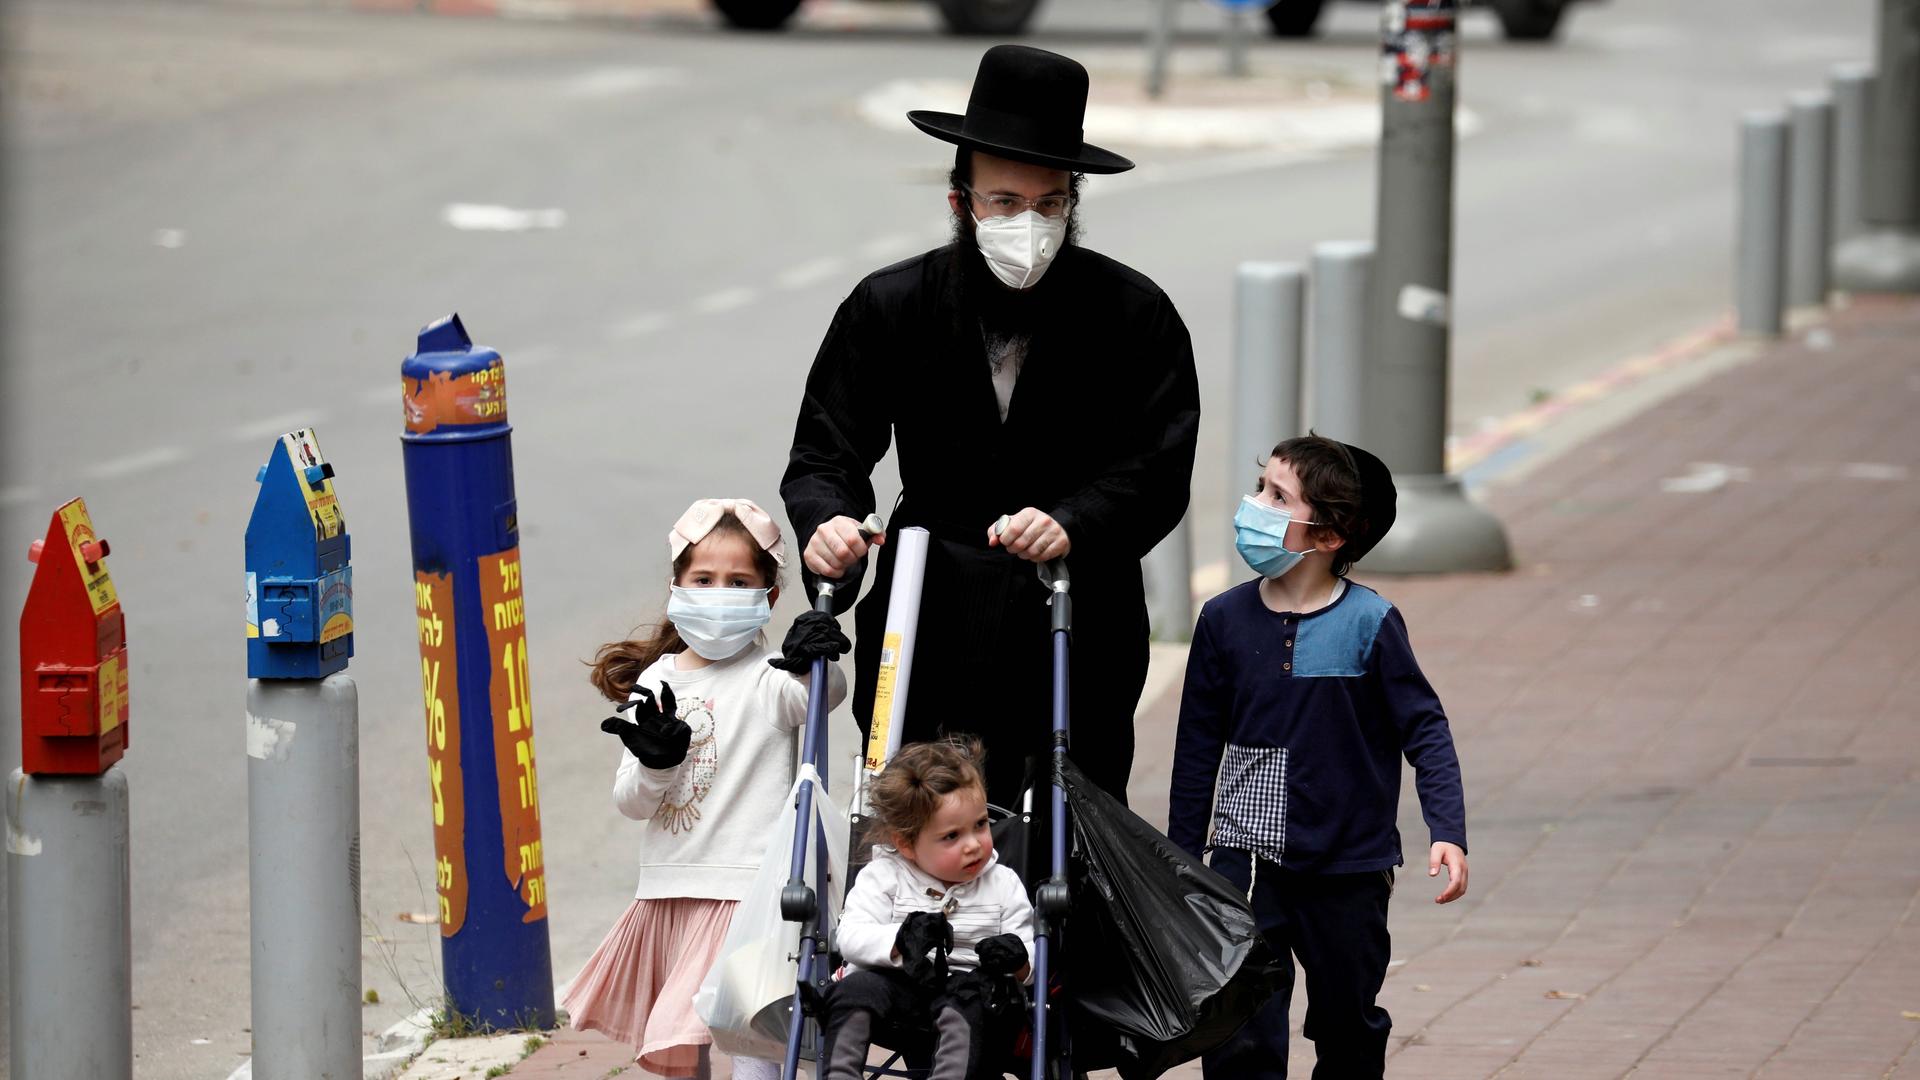 An ultra-Orthodox Jewish family wearing masks